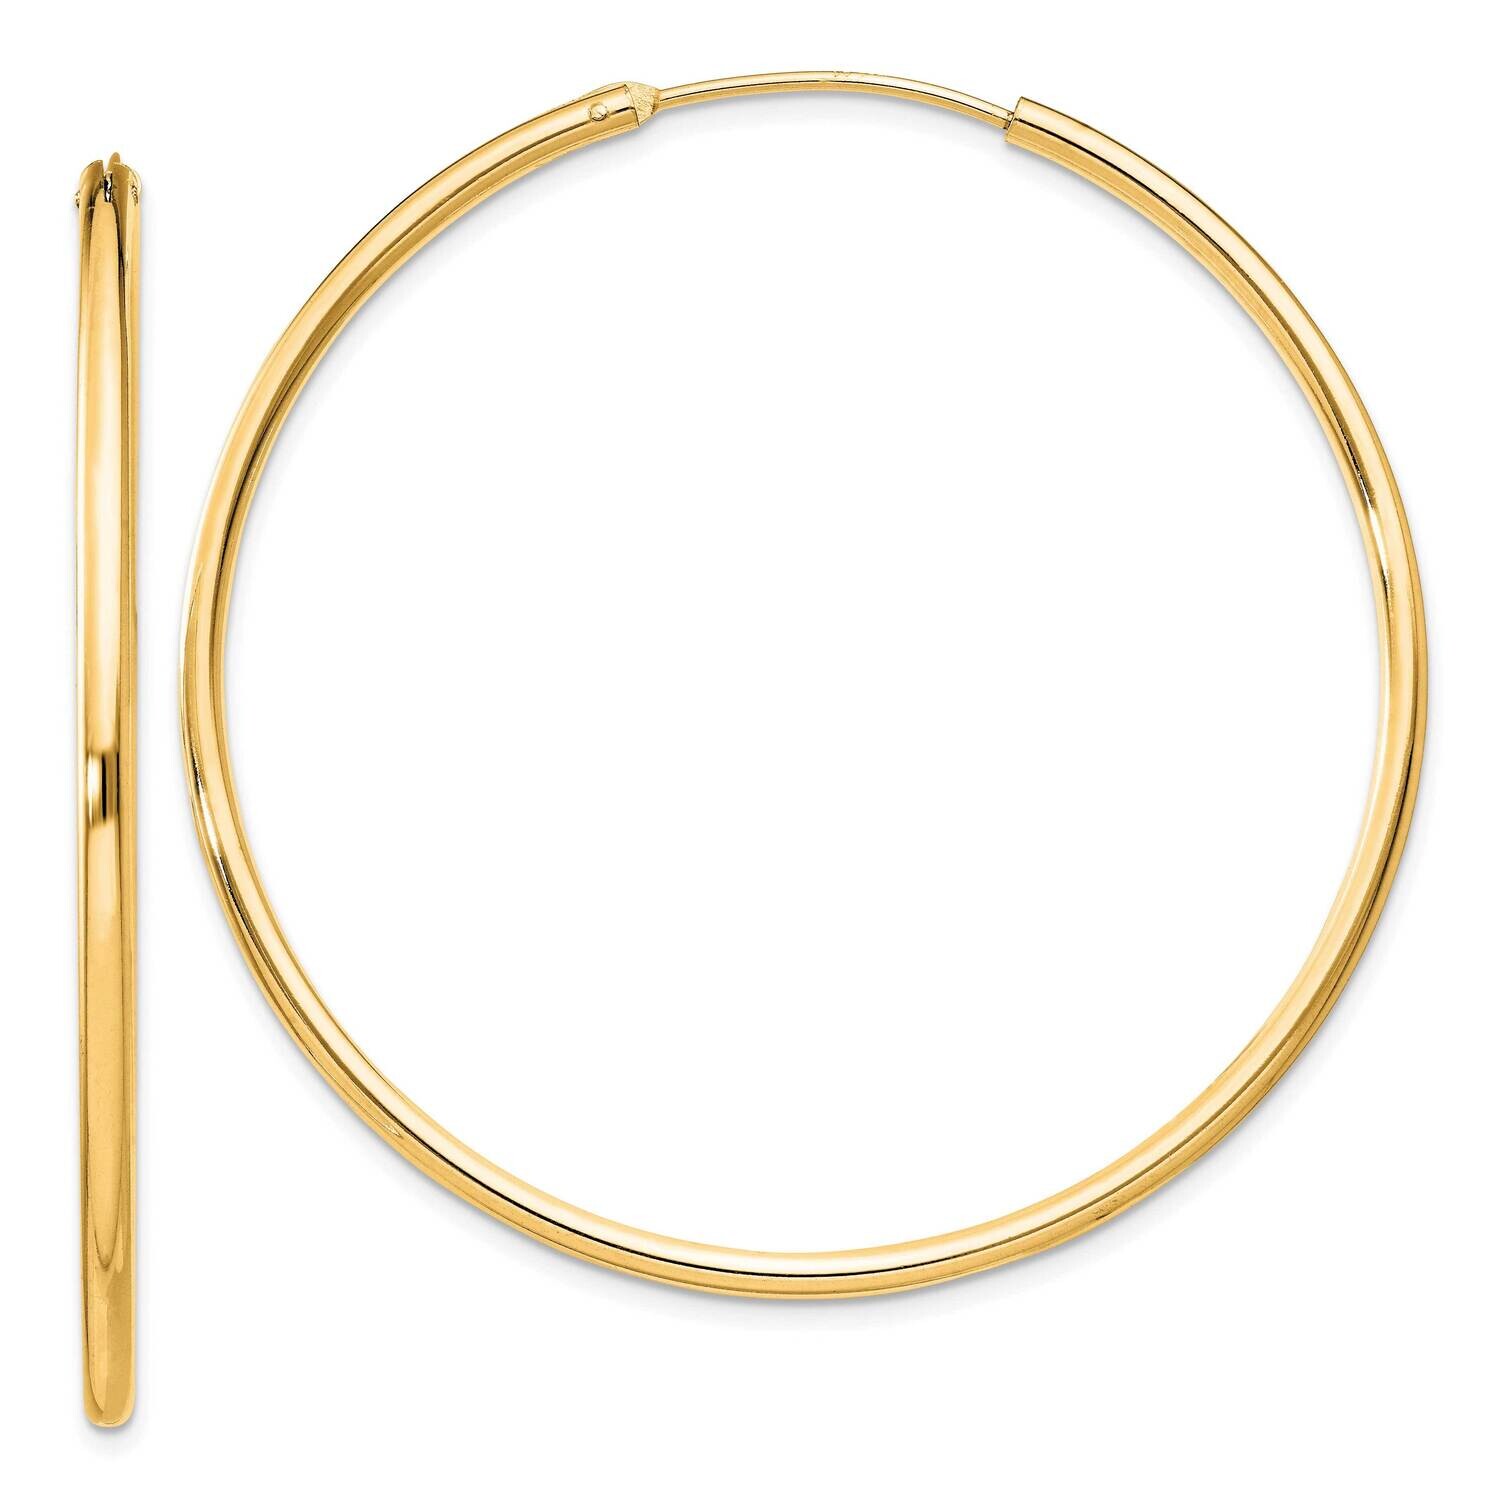 Flash Gold-Plated 2mm Endless Hoop Earrings Sterling Silver QE4374GP